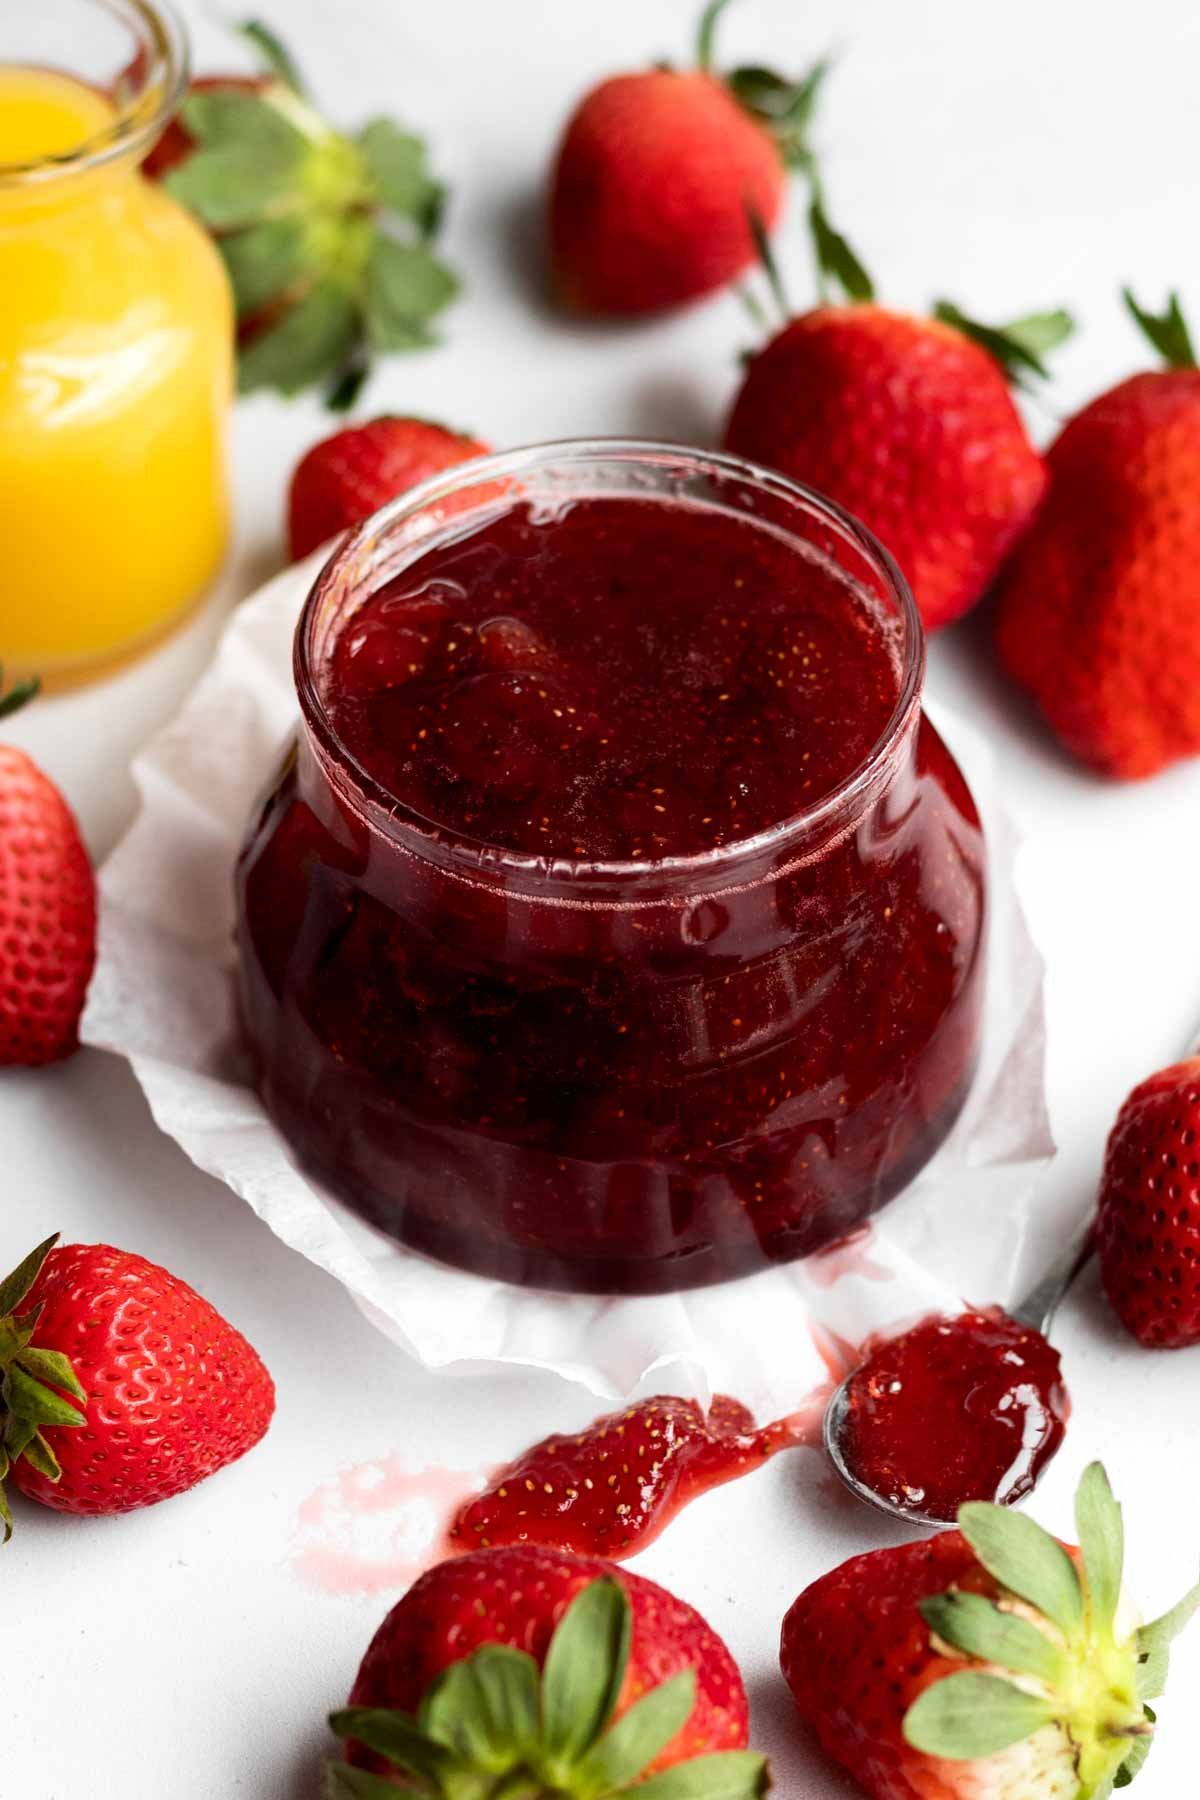 Delicious bright red sugary strawberry jam in a glass ramekin.